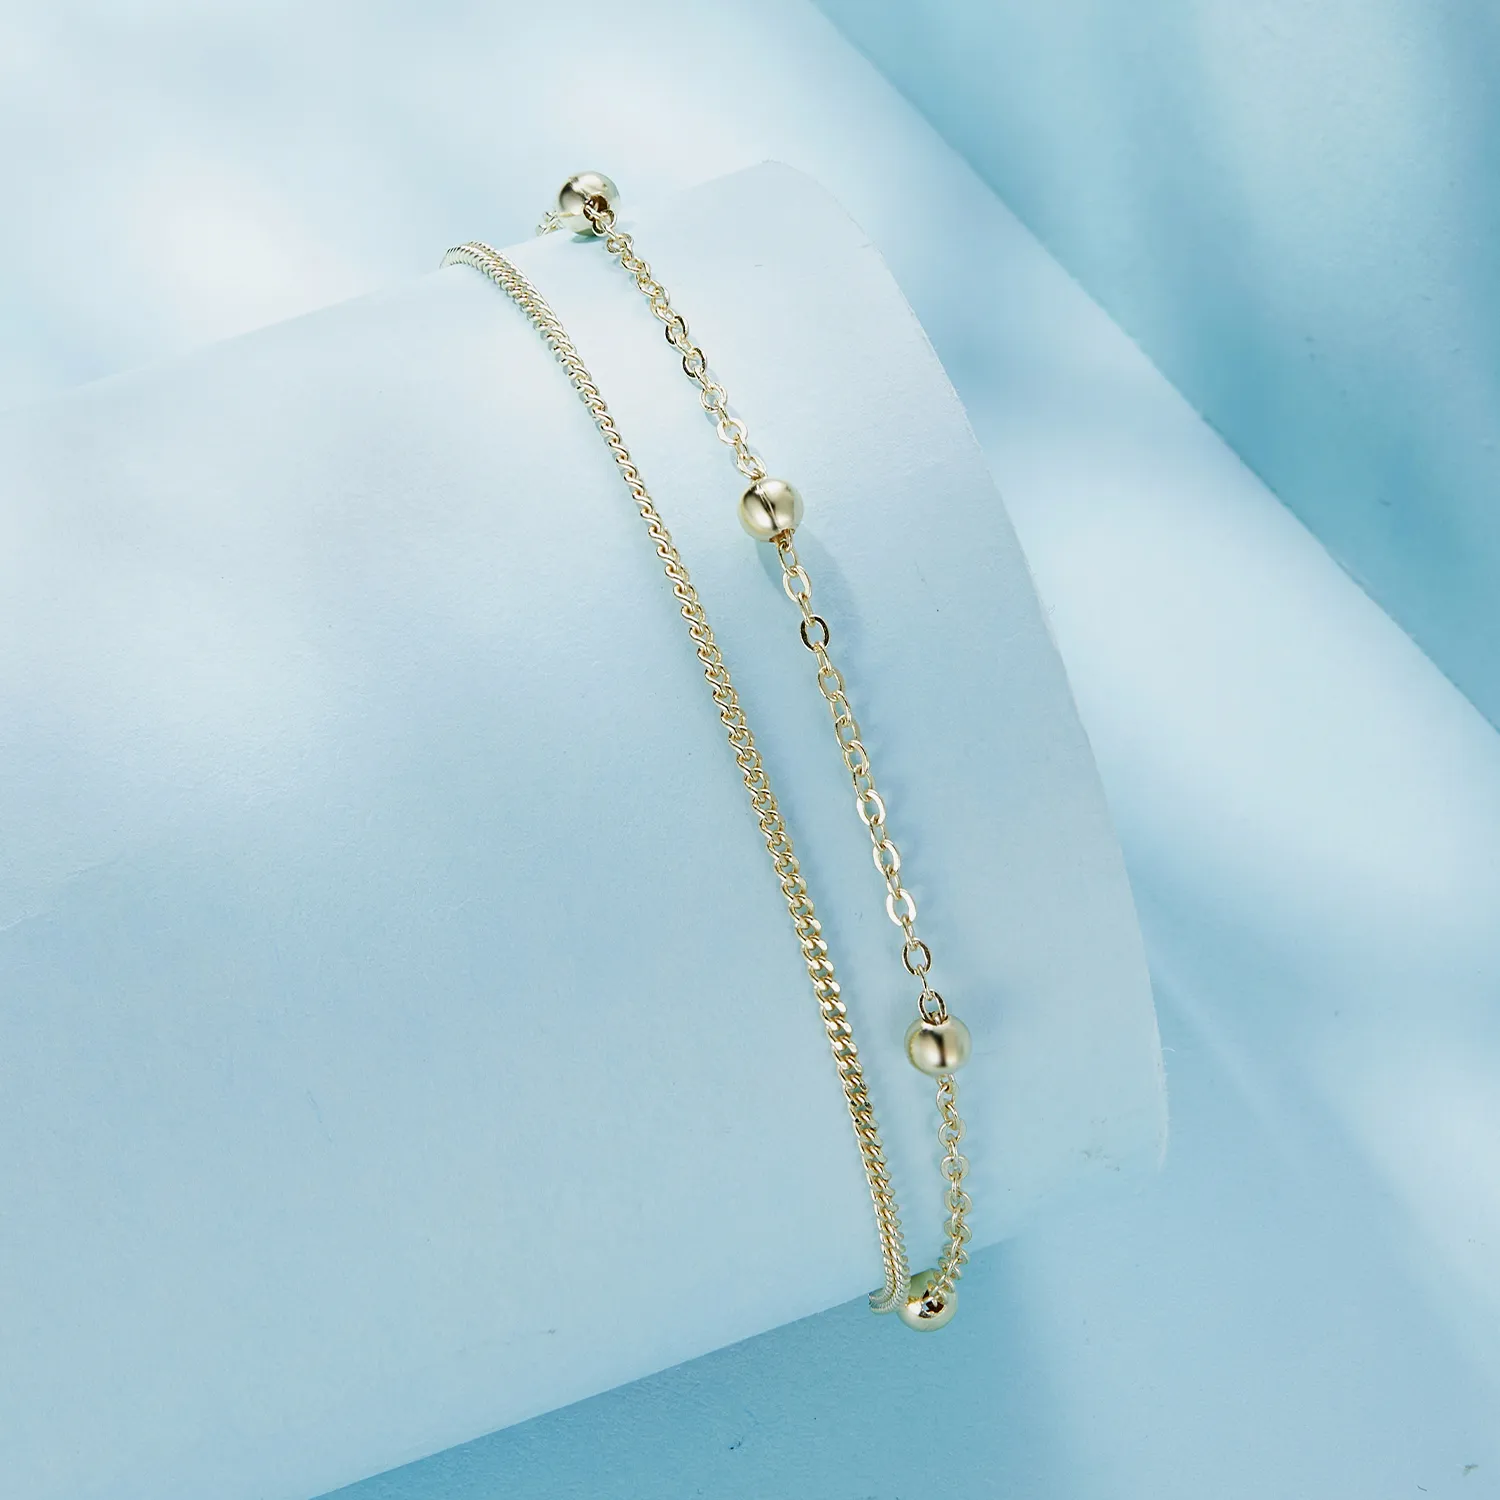 Pandora Style Golden Bead Chain Bracelet - SCB131-B